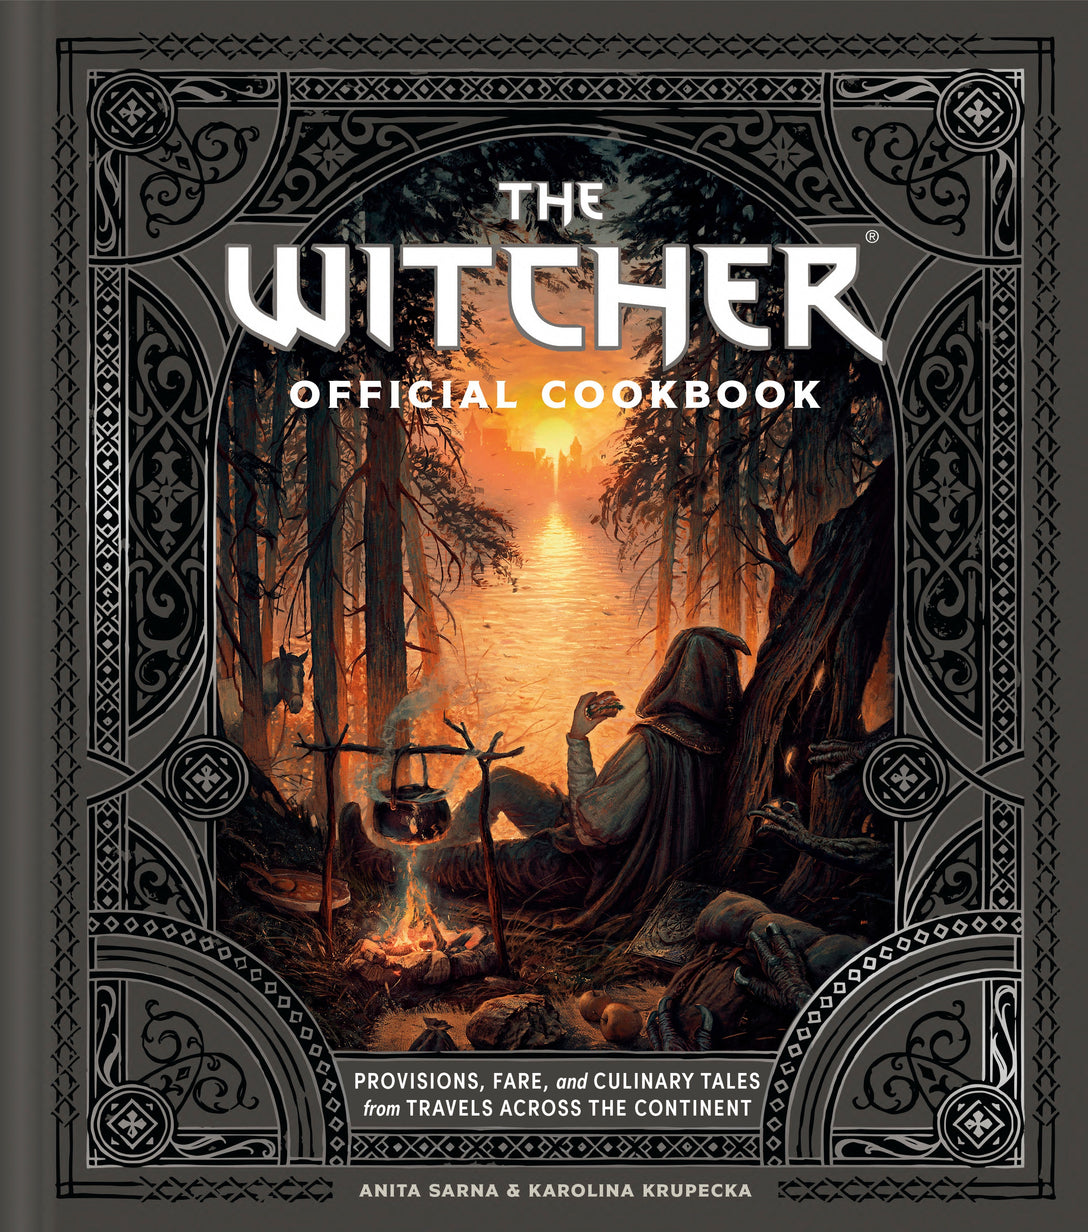 The Witcher Official Cookbook by Anita Sarna, Karolina Krupecka